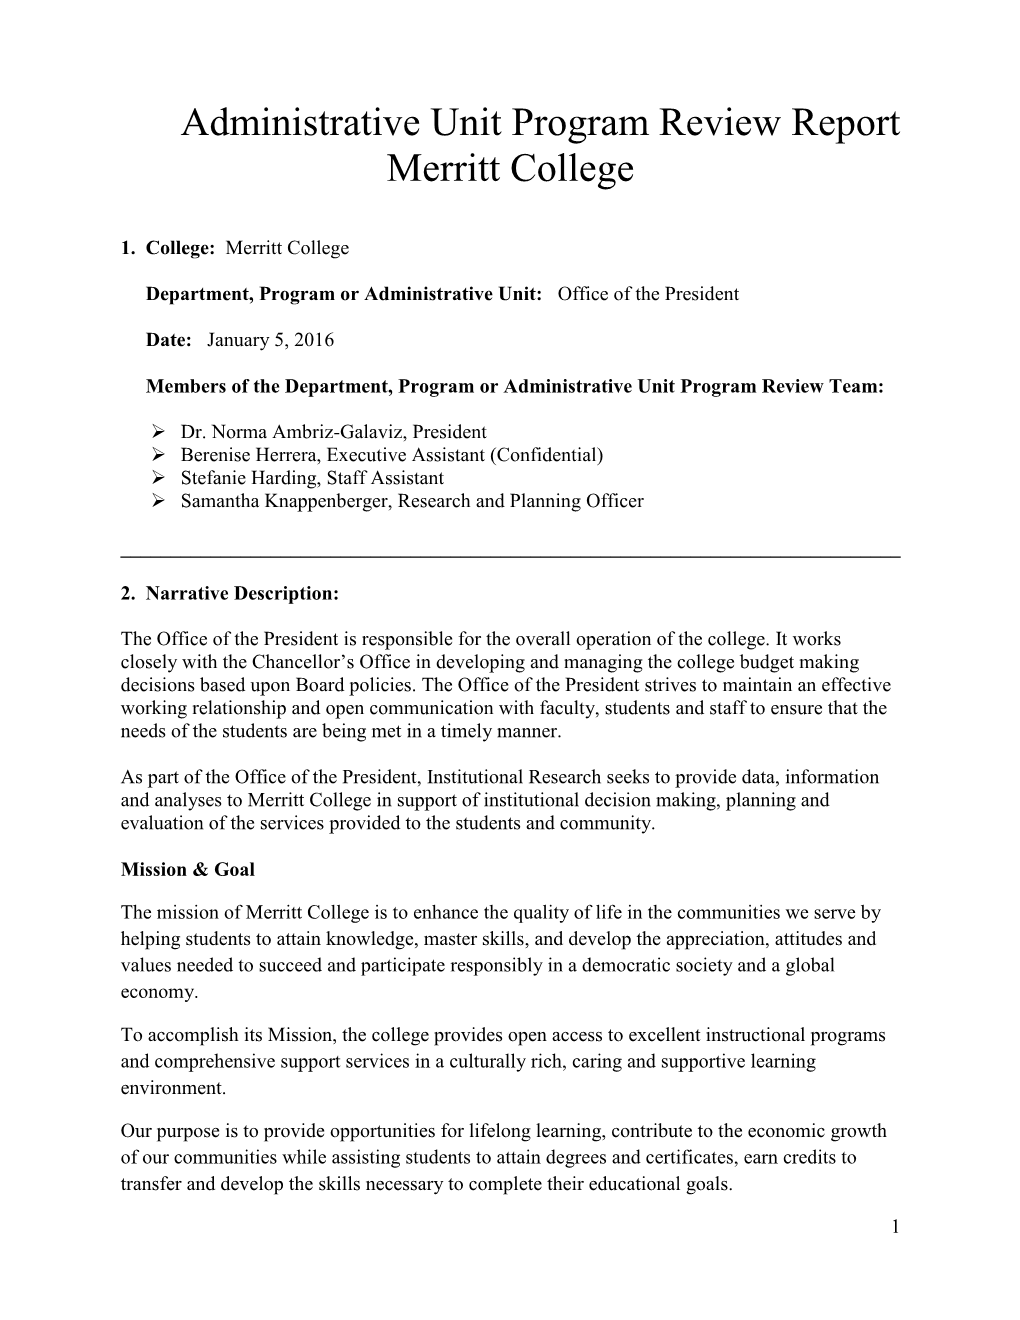 Administrative Unit Program Review Report Merritt College